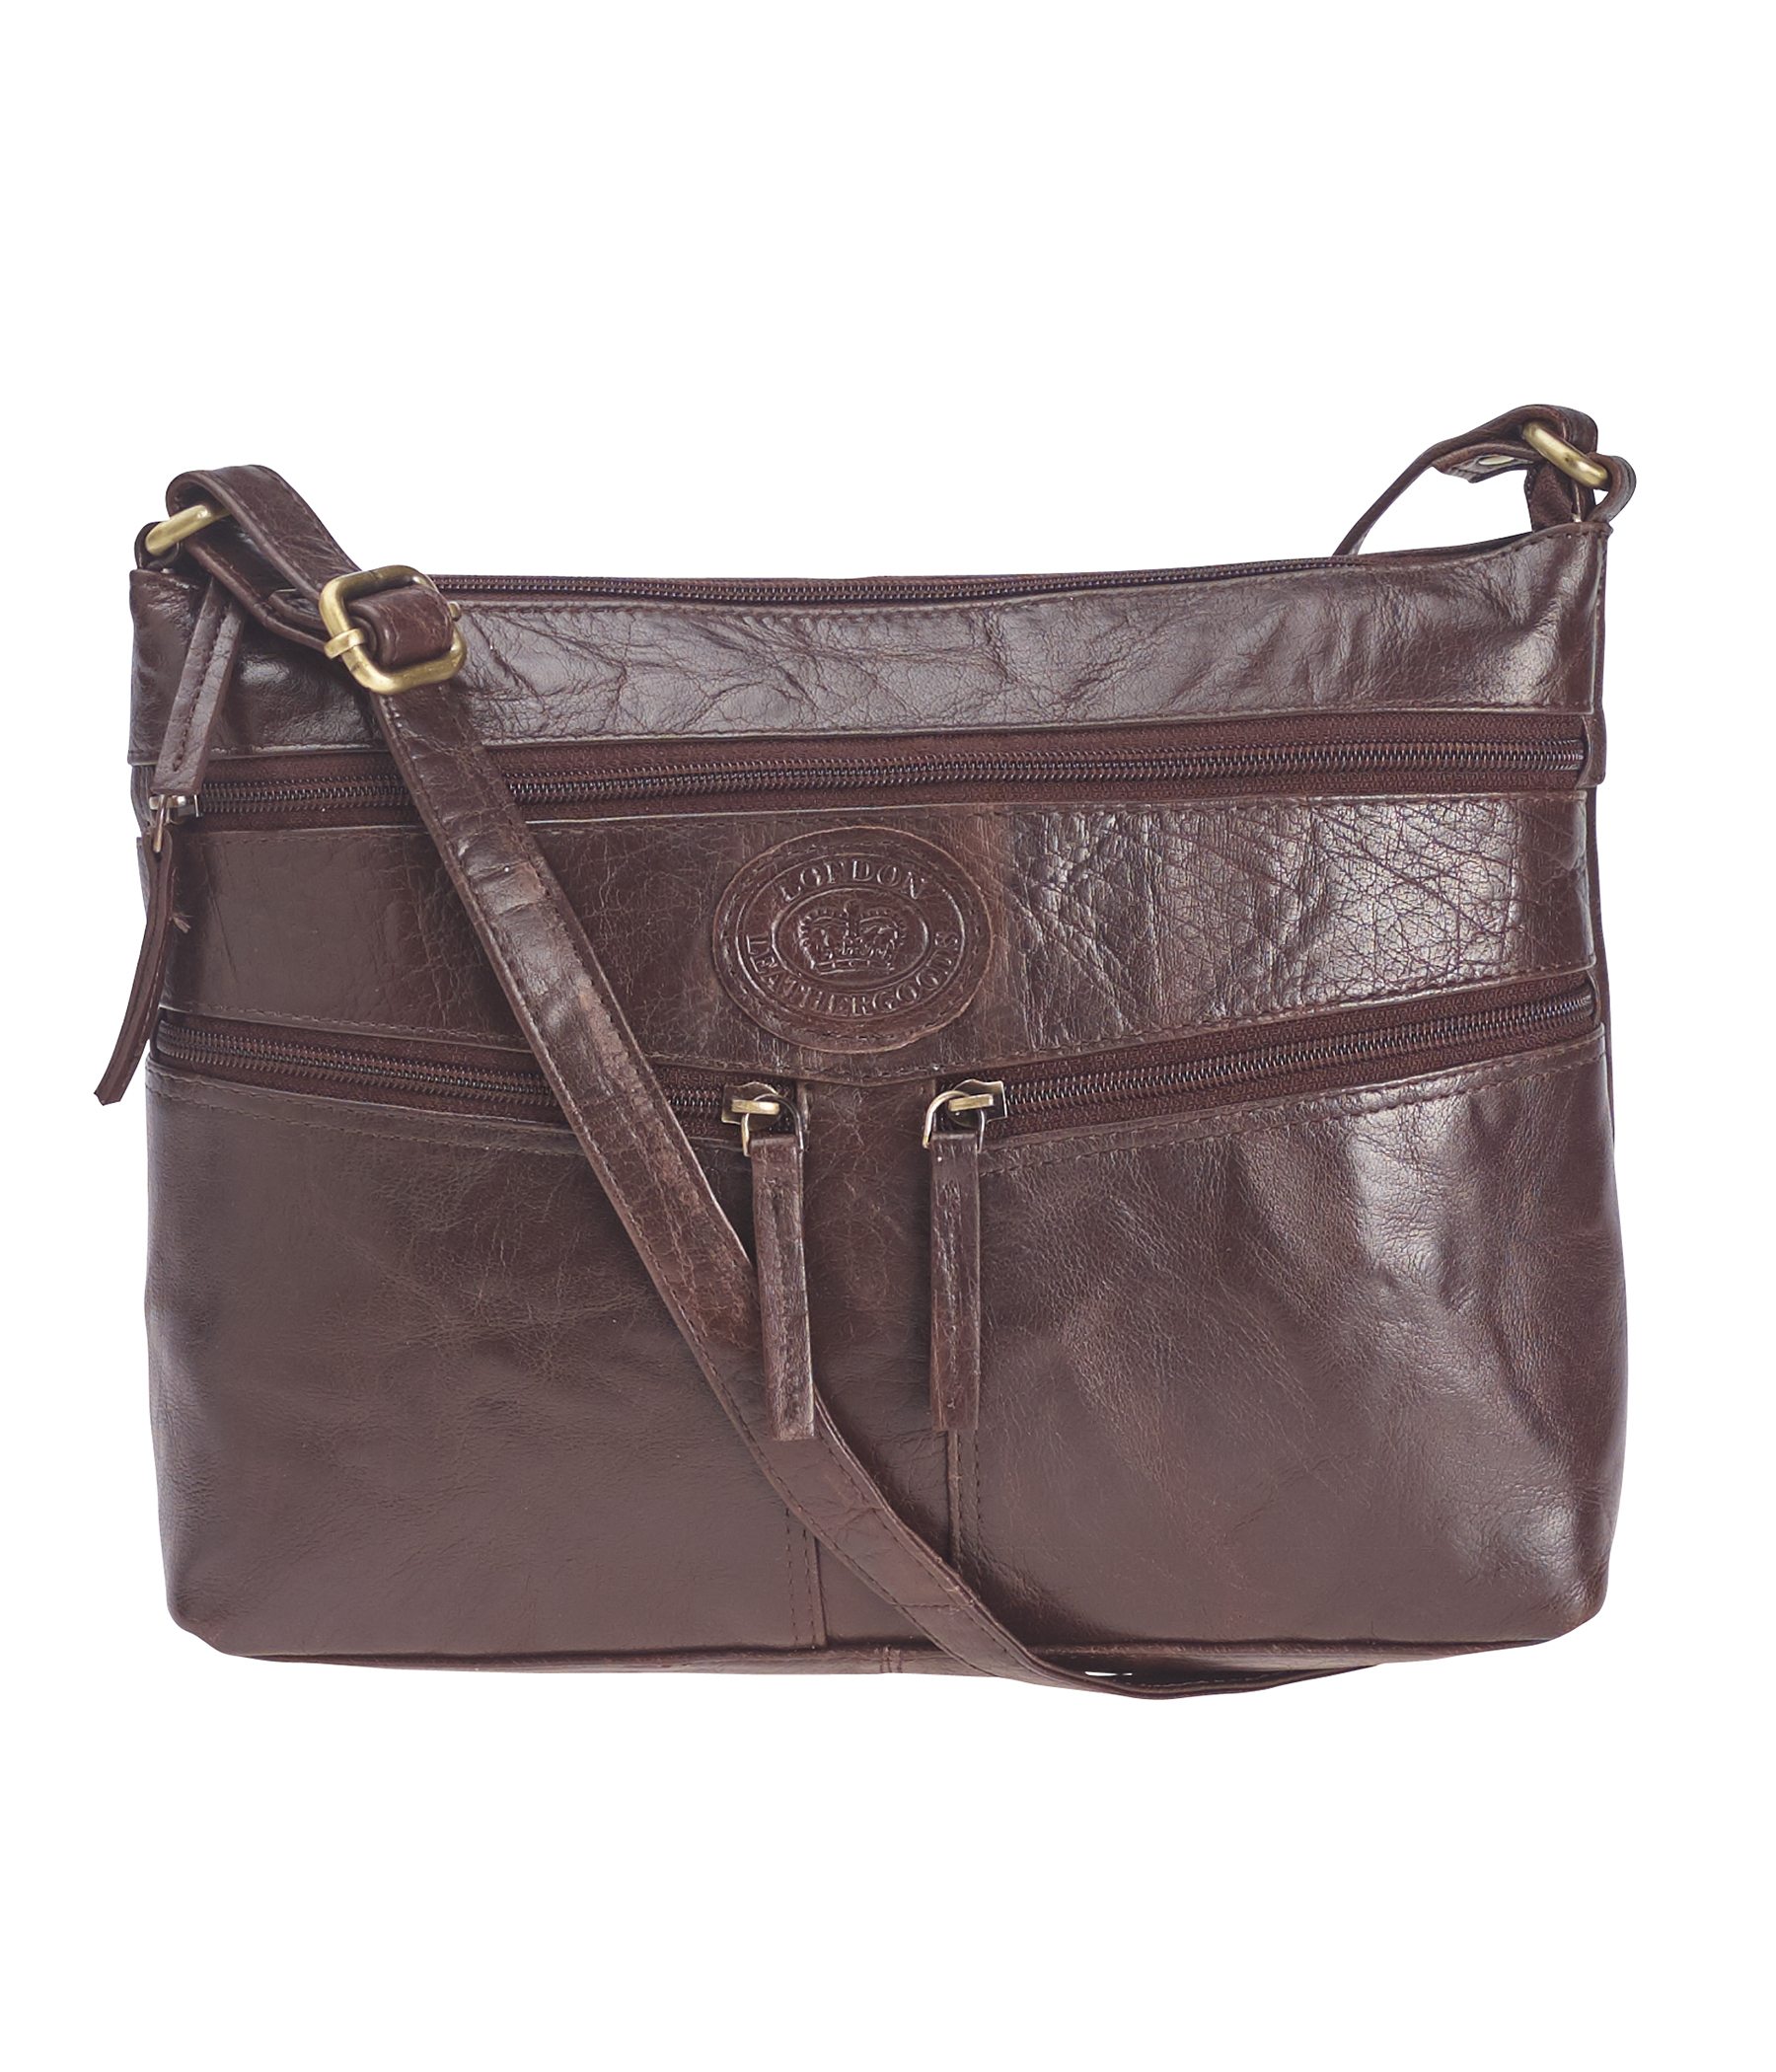 Handbags - Leather